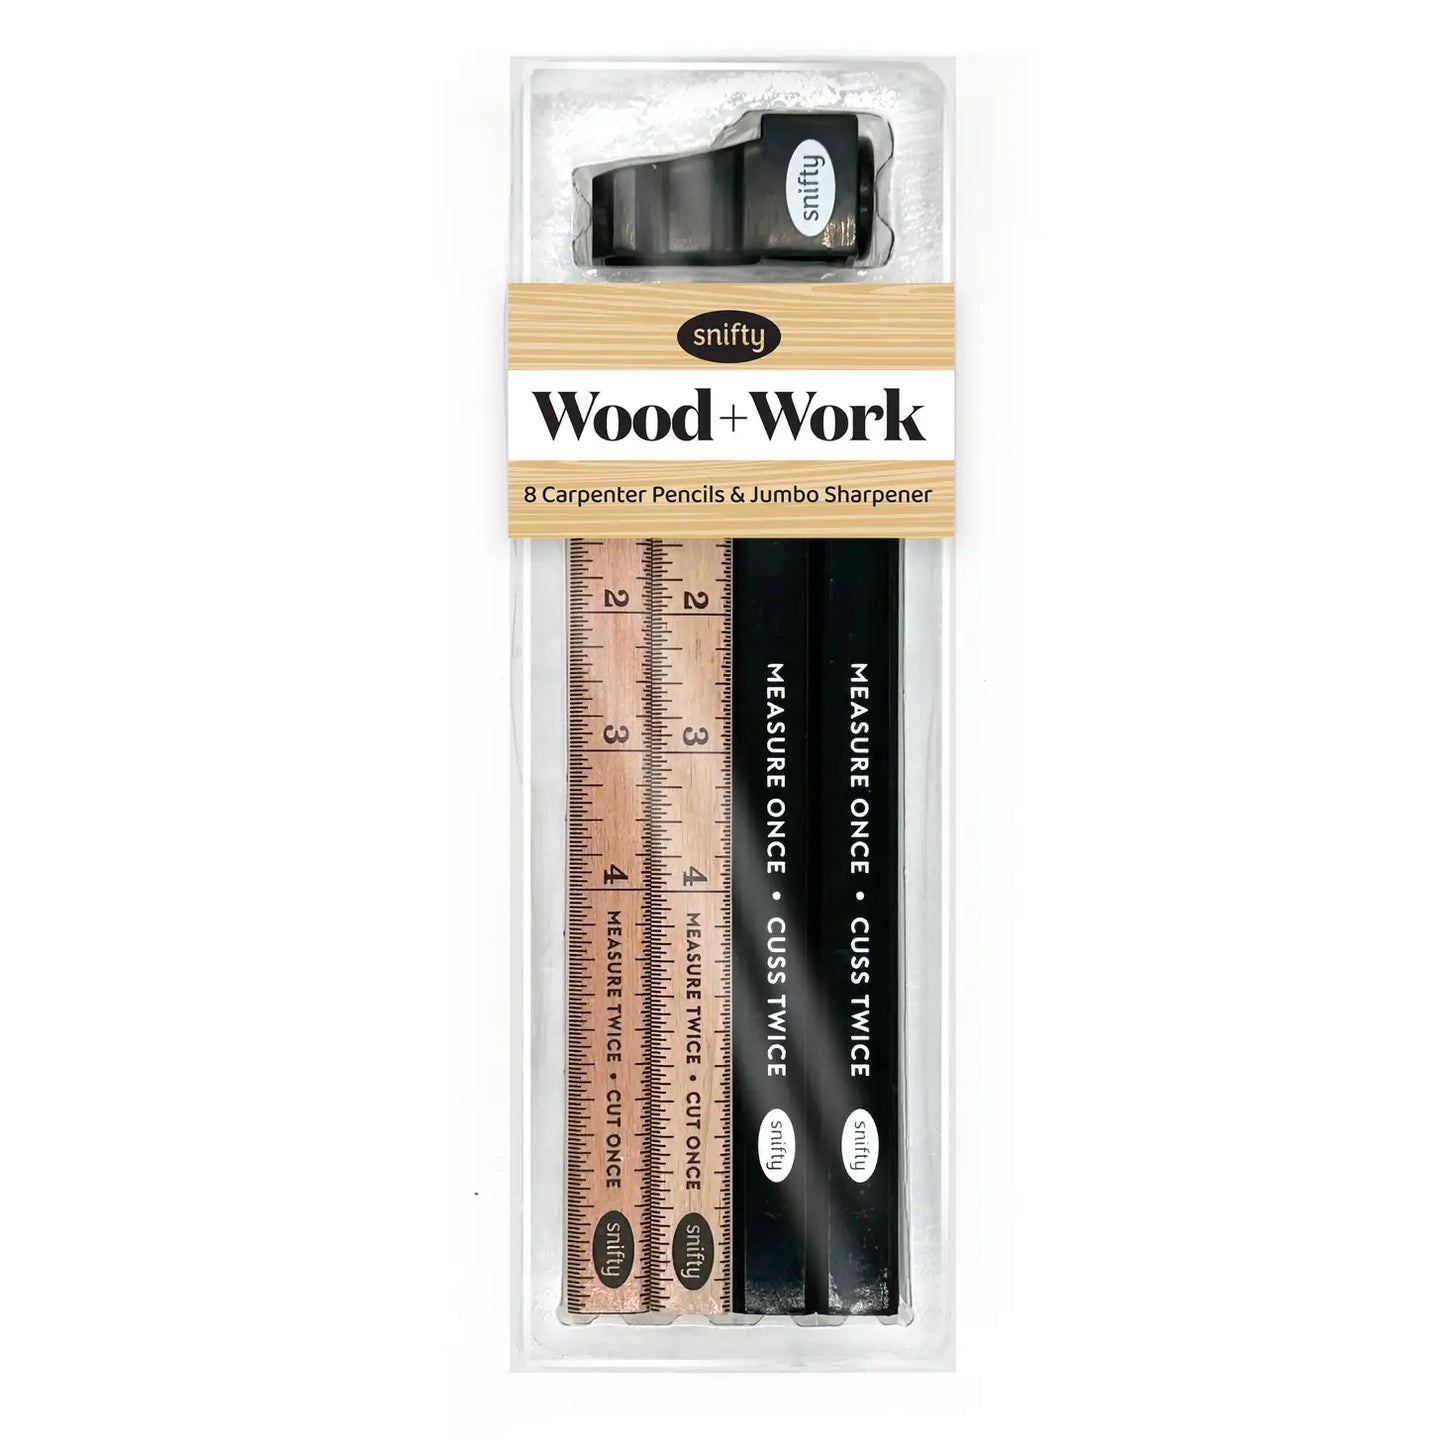 Wood + Work Carpenter Pencils + Sharpener